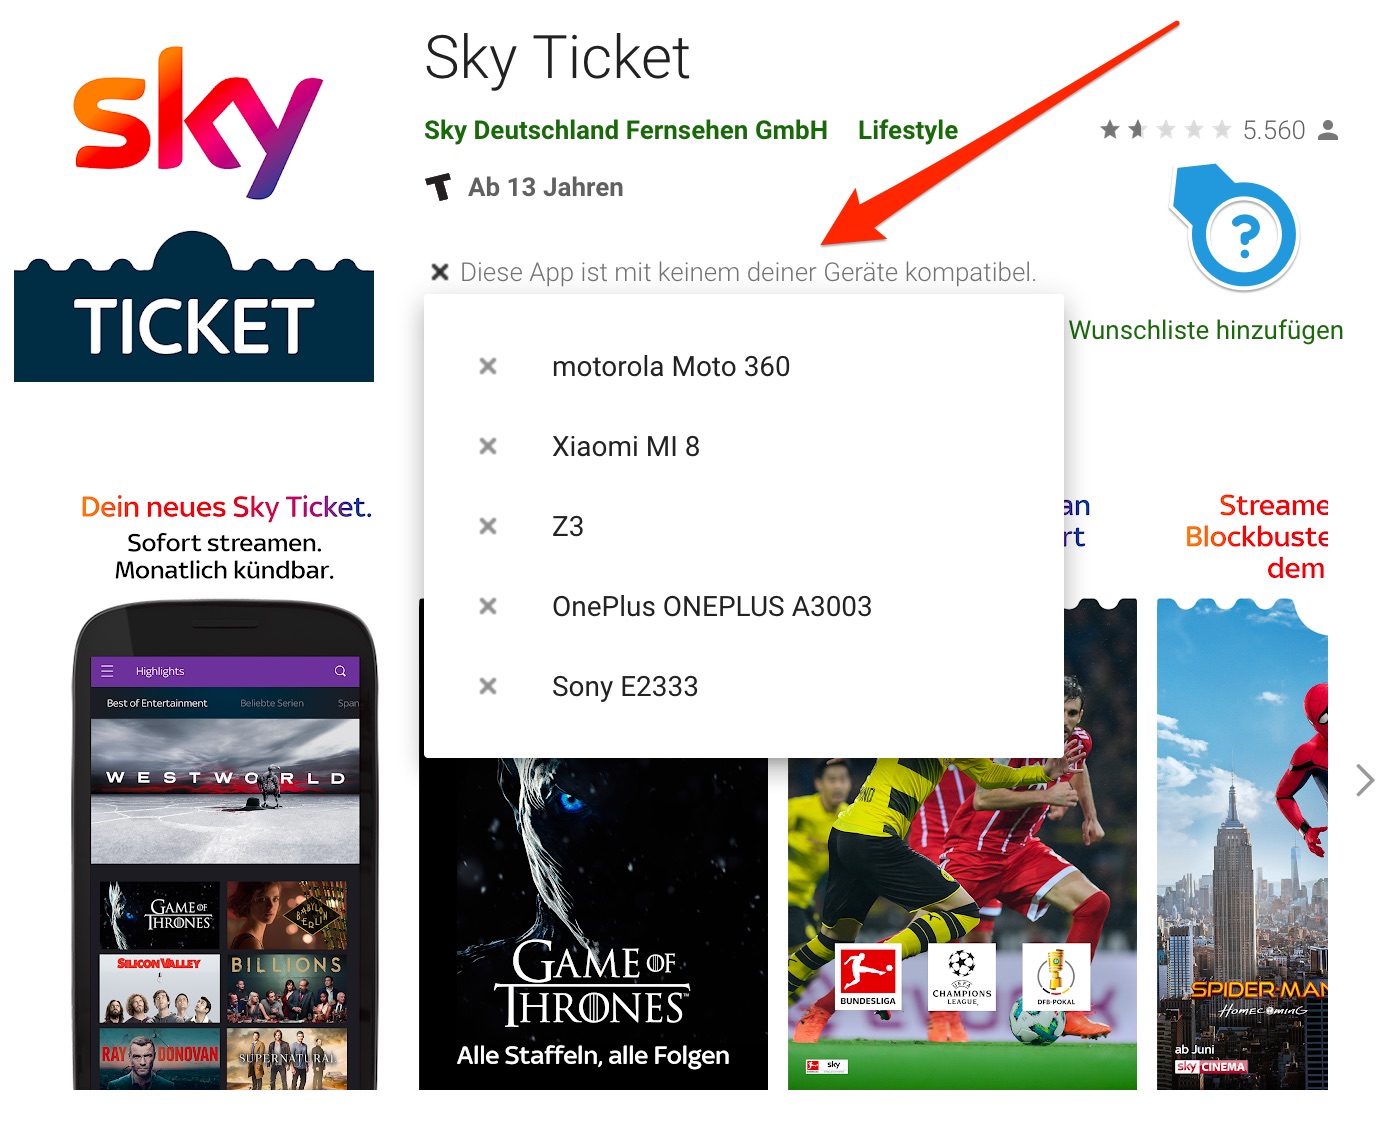 Sky Ticket App mit keinem meiner Geräte kompatibel... - Sky Community